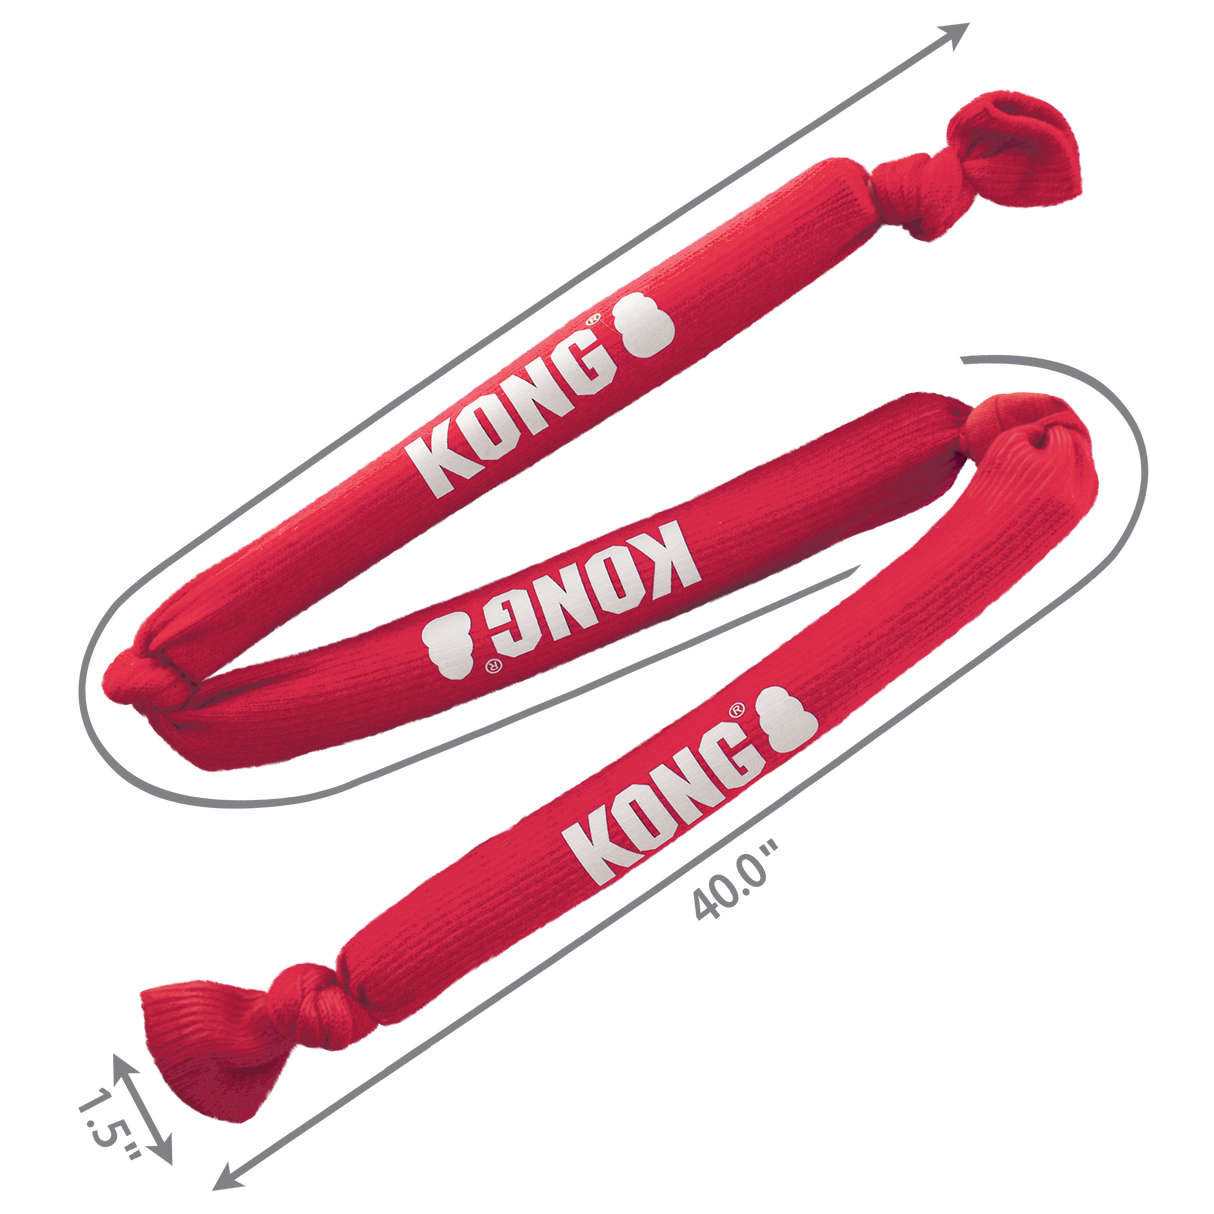 KONG Signature Crunch Rope Triple